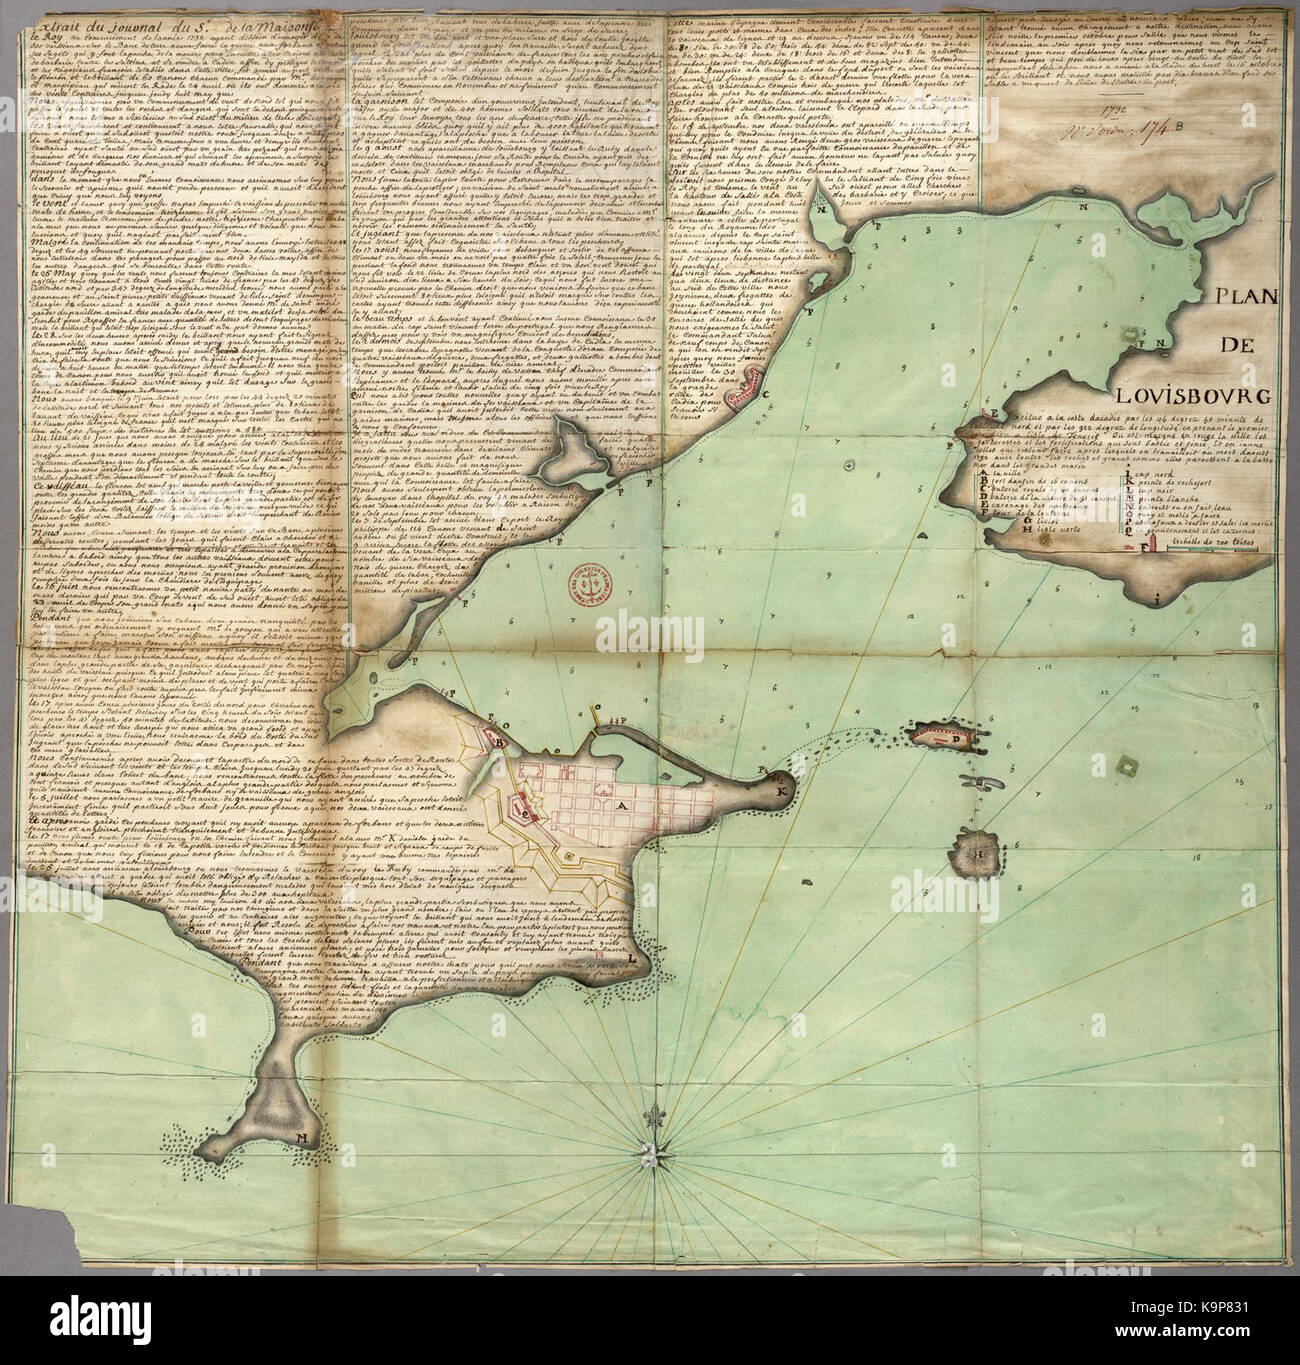 Plan de Louisbourg 1732 Foto de stock